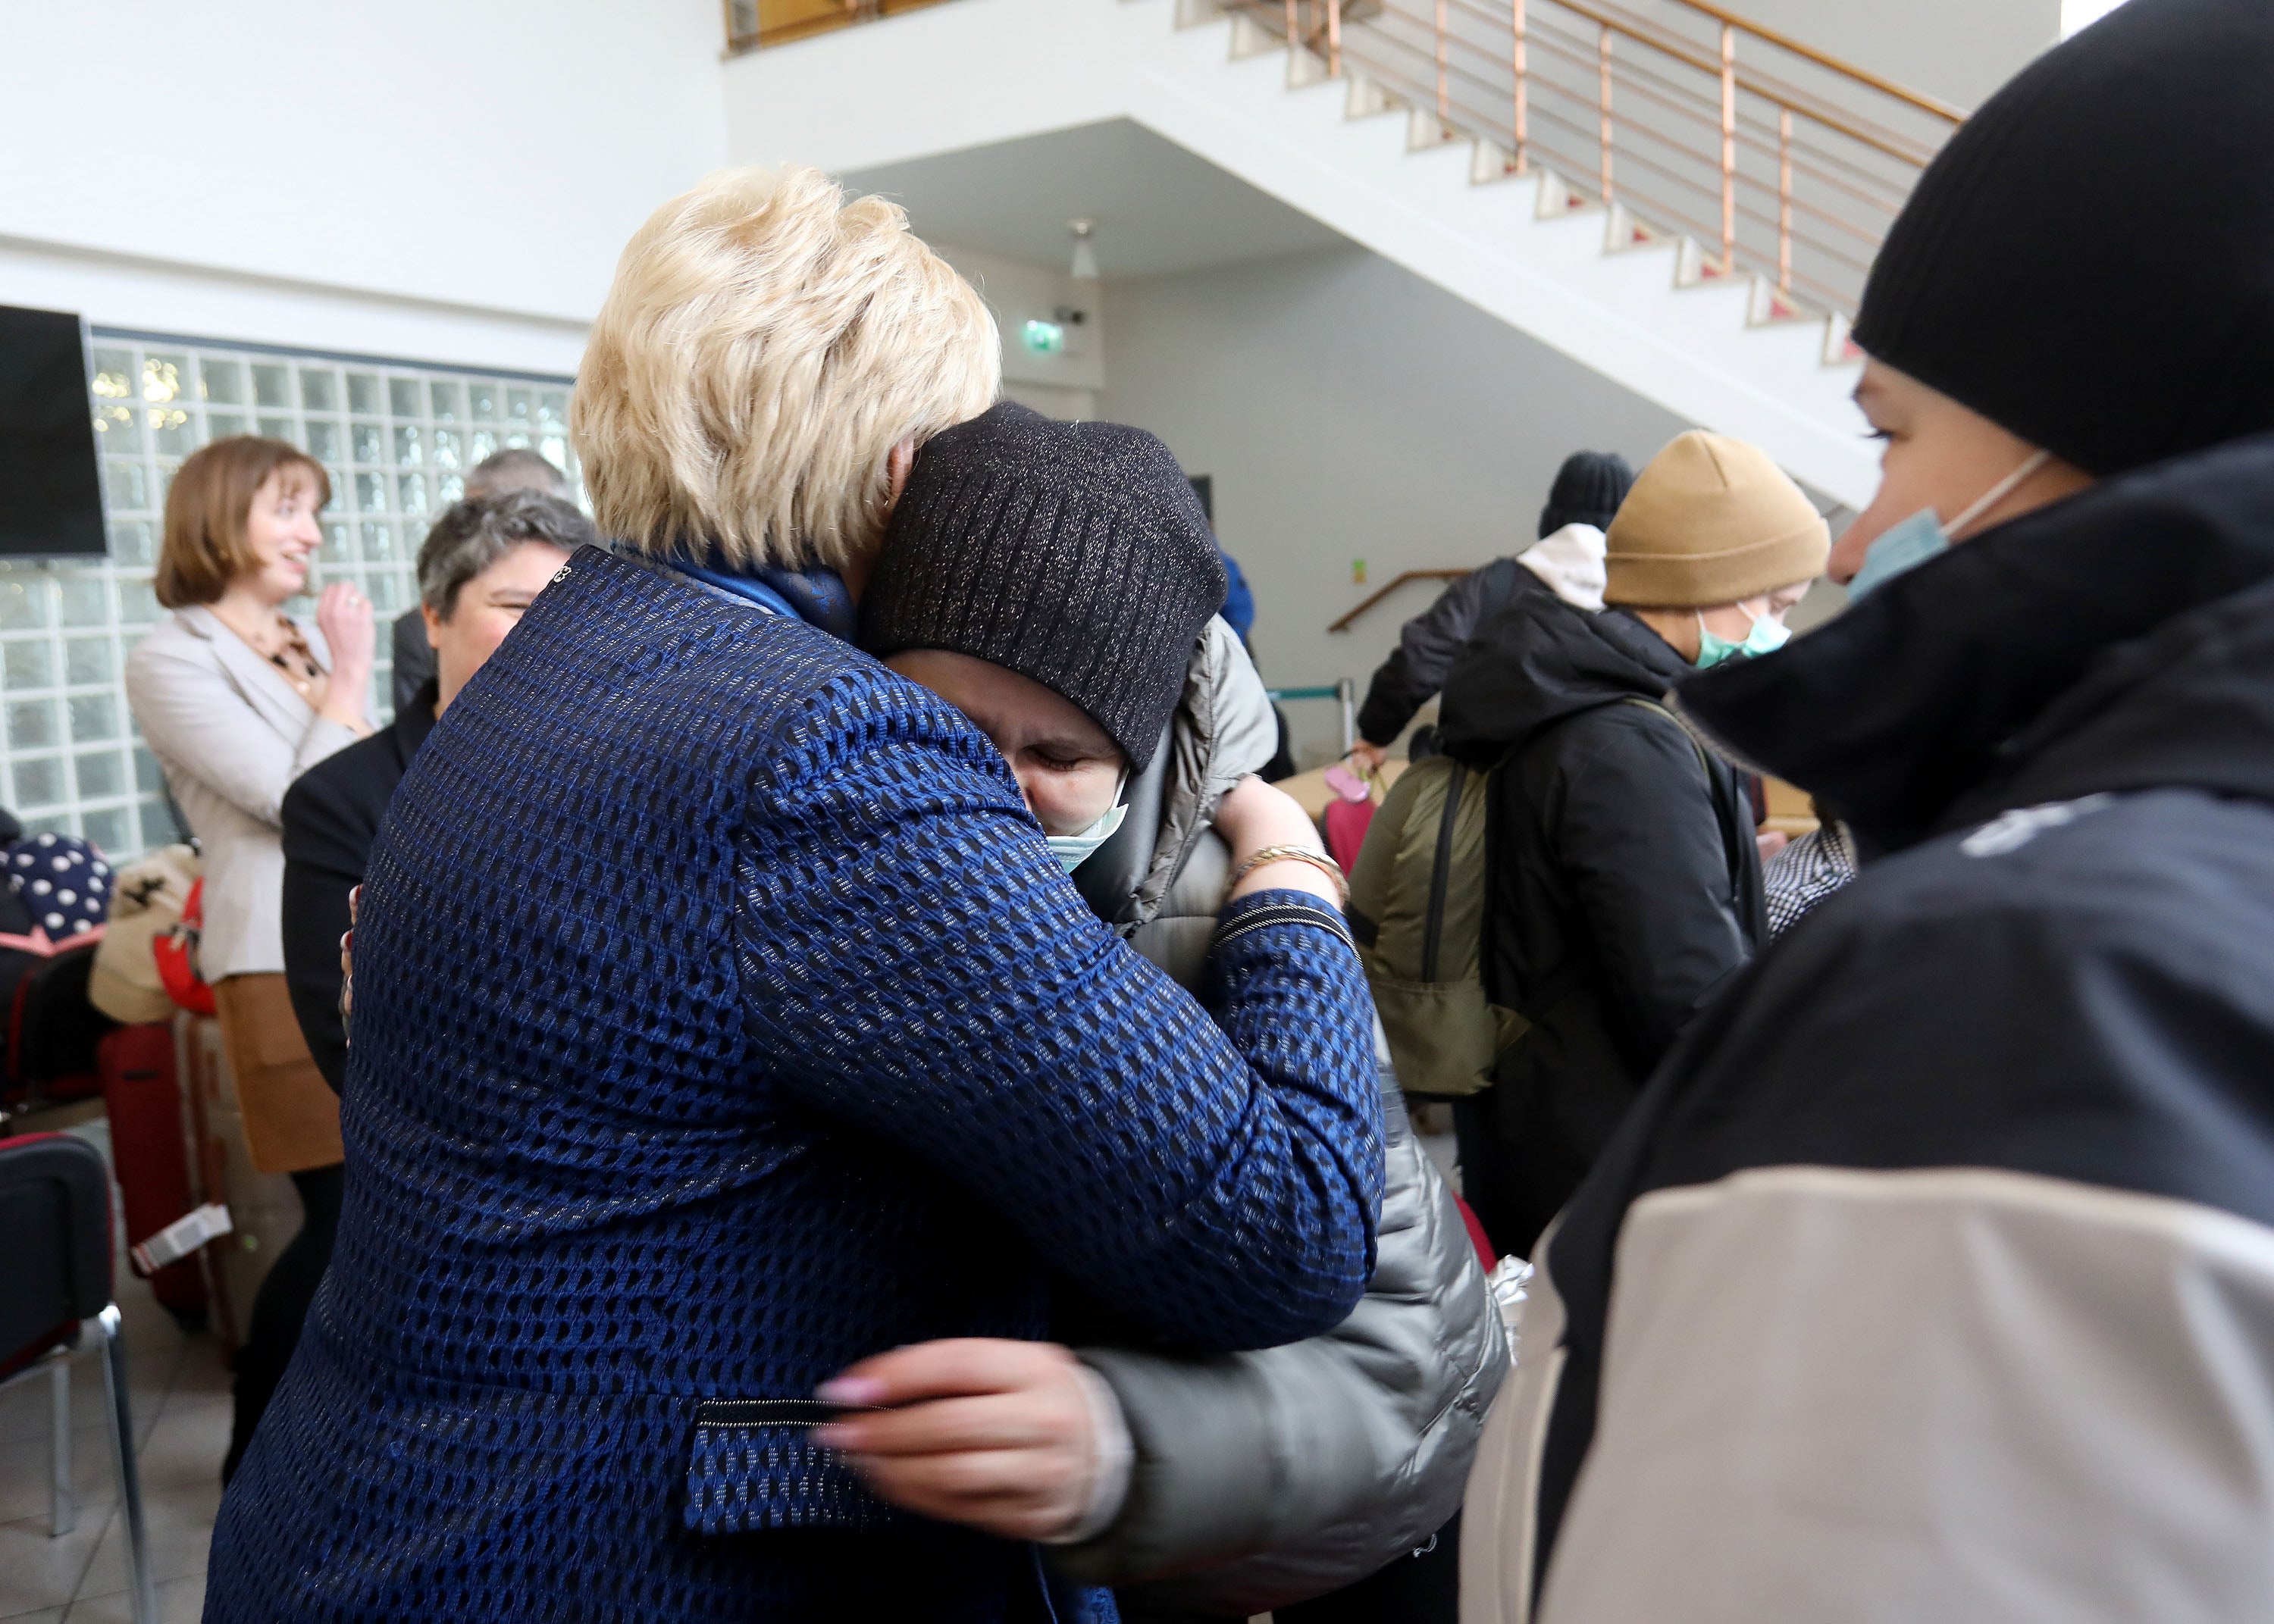 Heather Humphreys, Ireland’s social protection minister, hugs Valentina Roman and Liudmyla Bodak at a reception facility at Dublin airport, on 9 March 2022